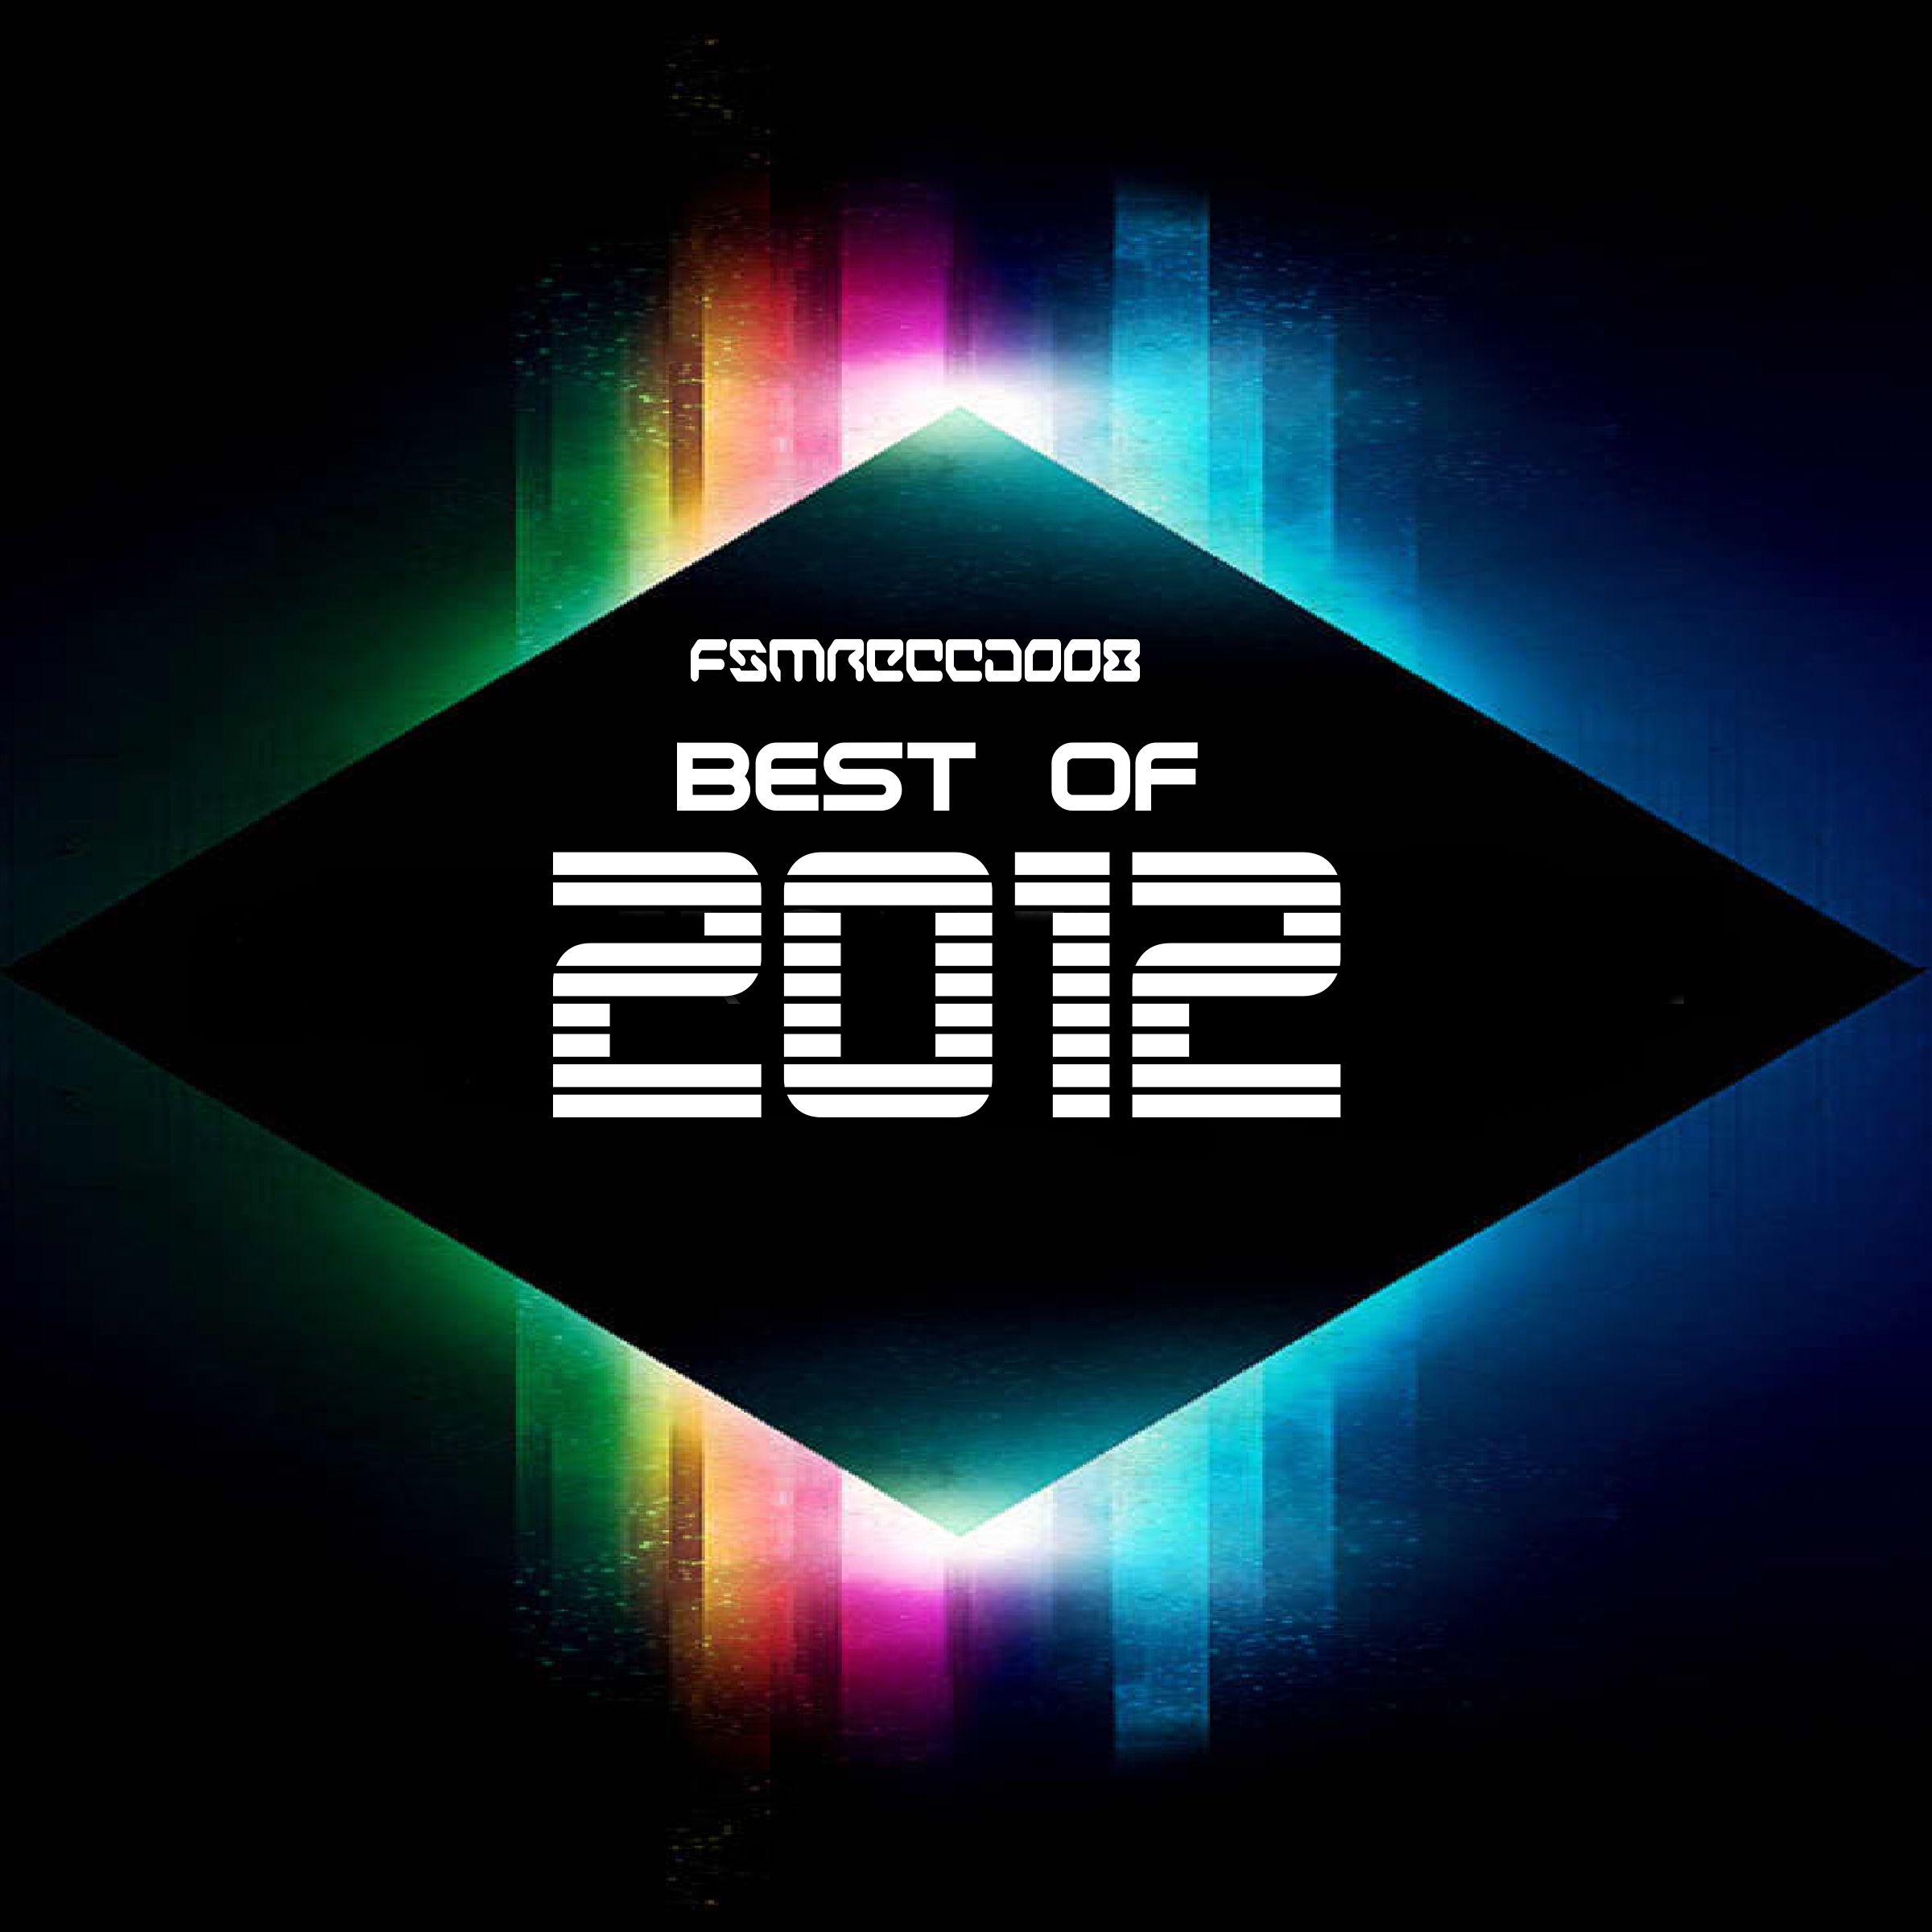 FSM Best of 2012